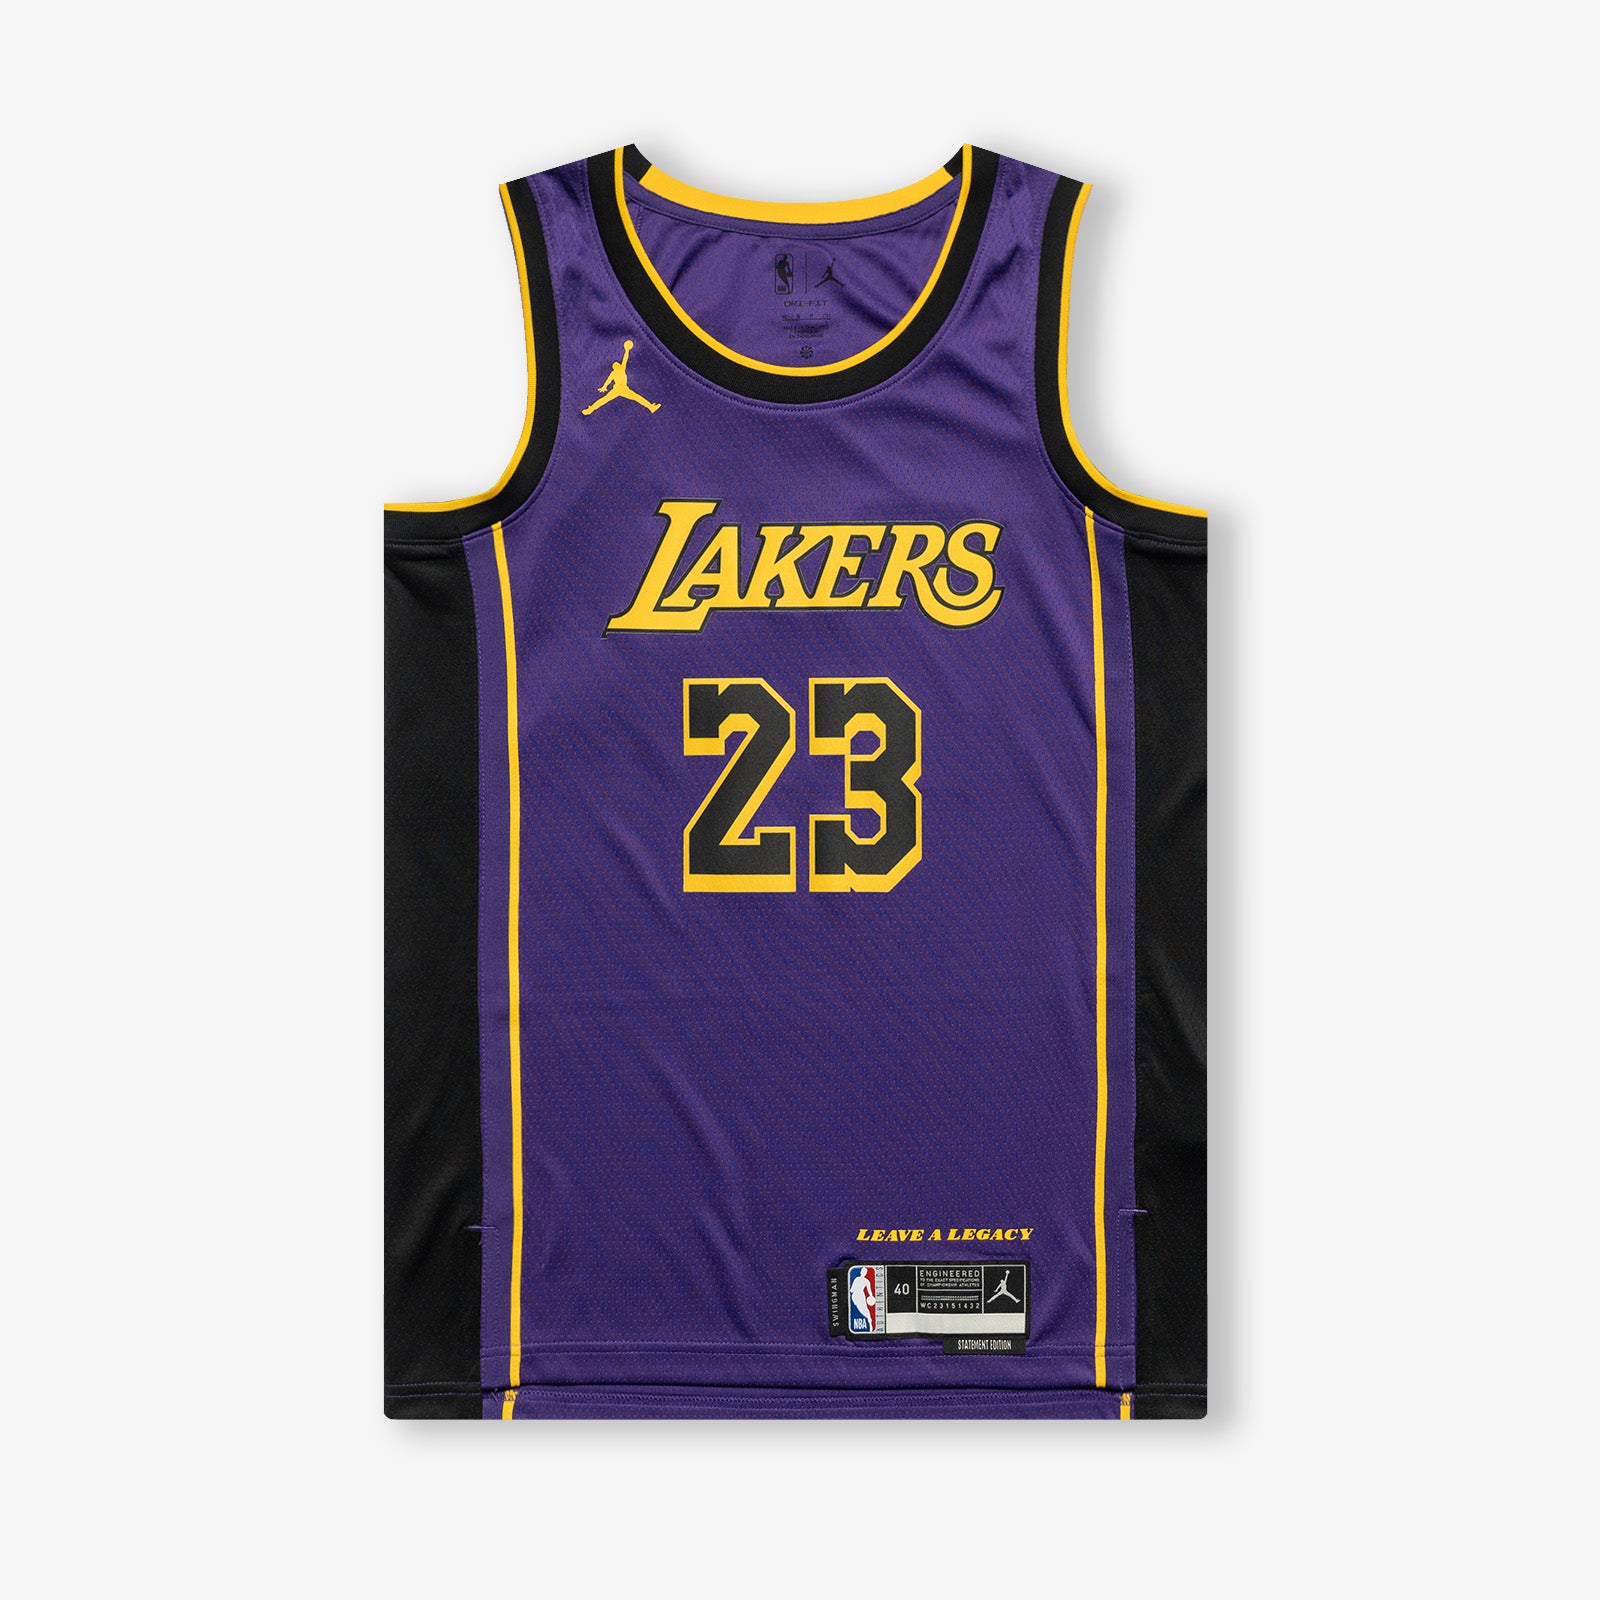 LeBron James Los Angeles Lakers Nike City Edition Swingman Jersey - Black